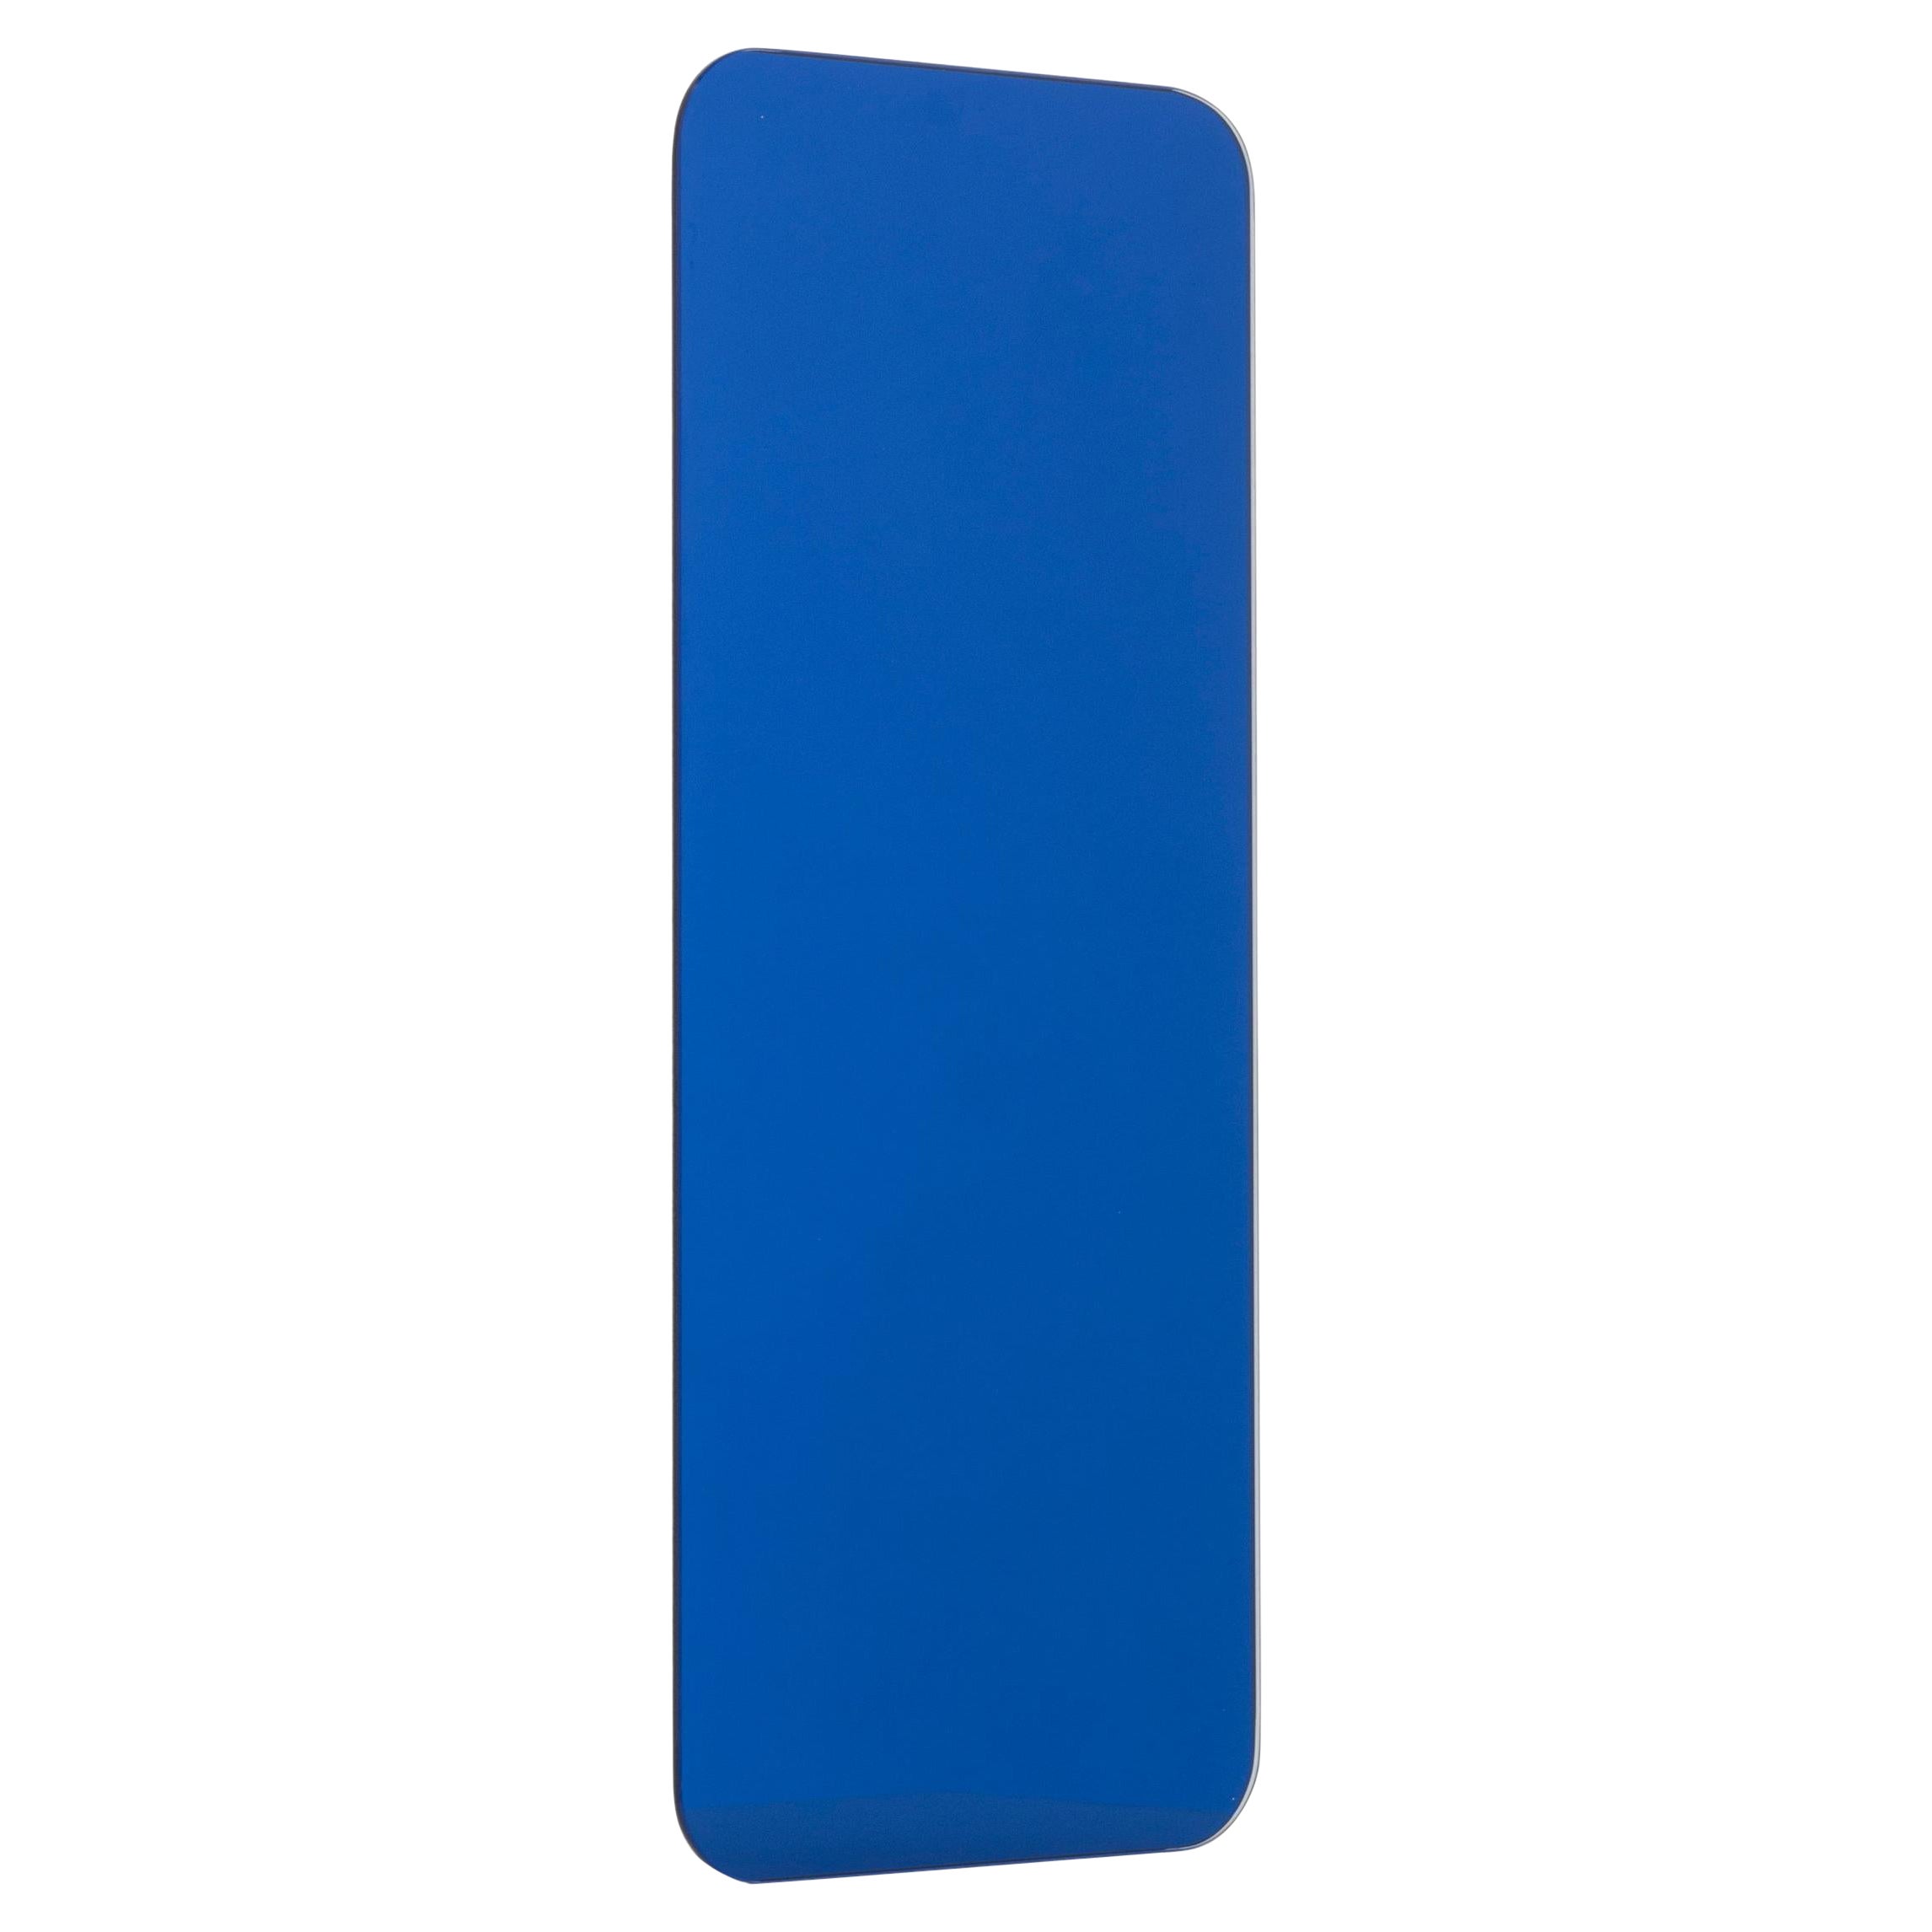 Quadris Blue Rectangular Frameless Contemporary Mirror Floating Effect, Small For Sale